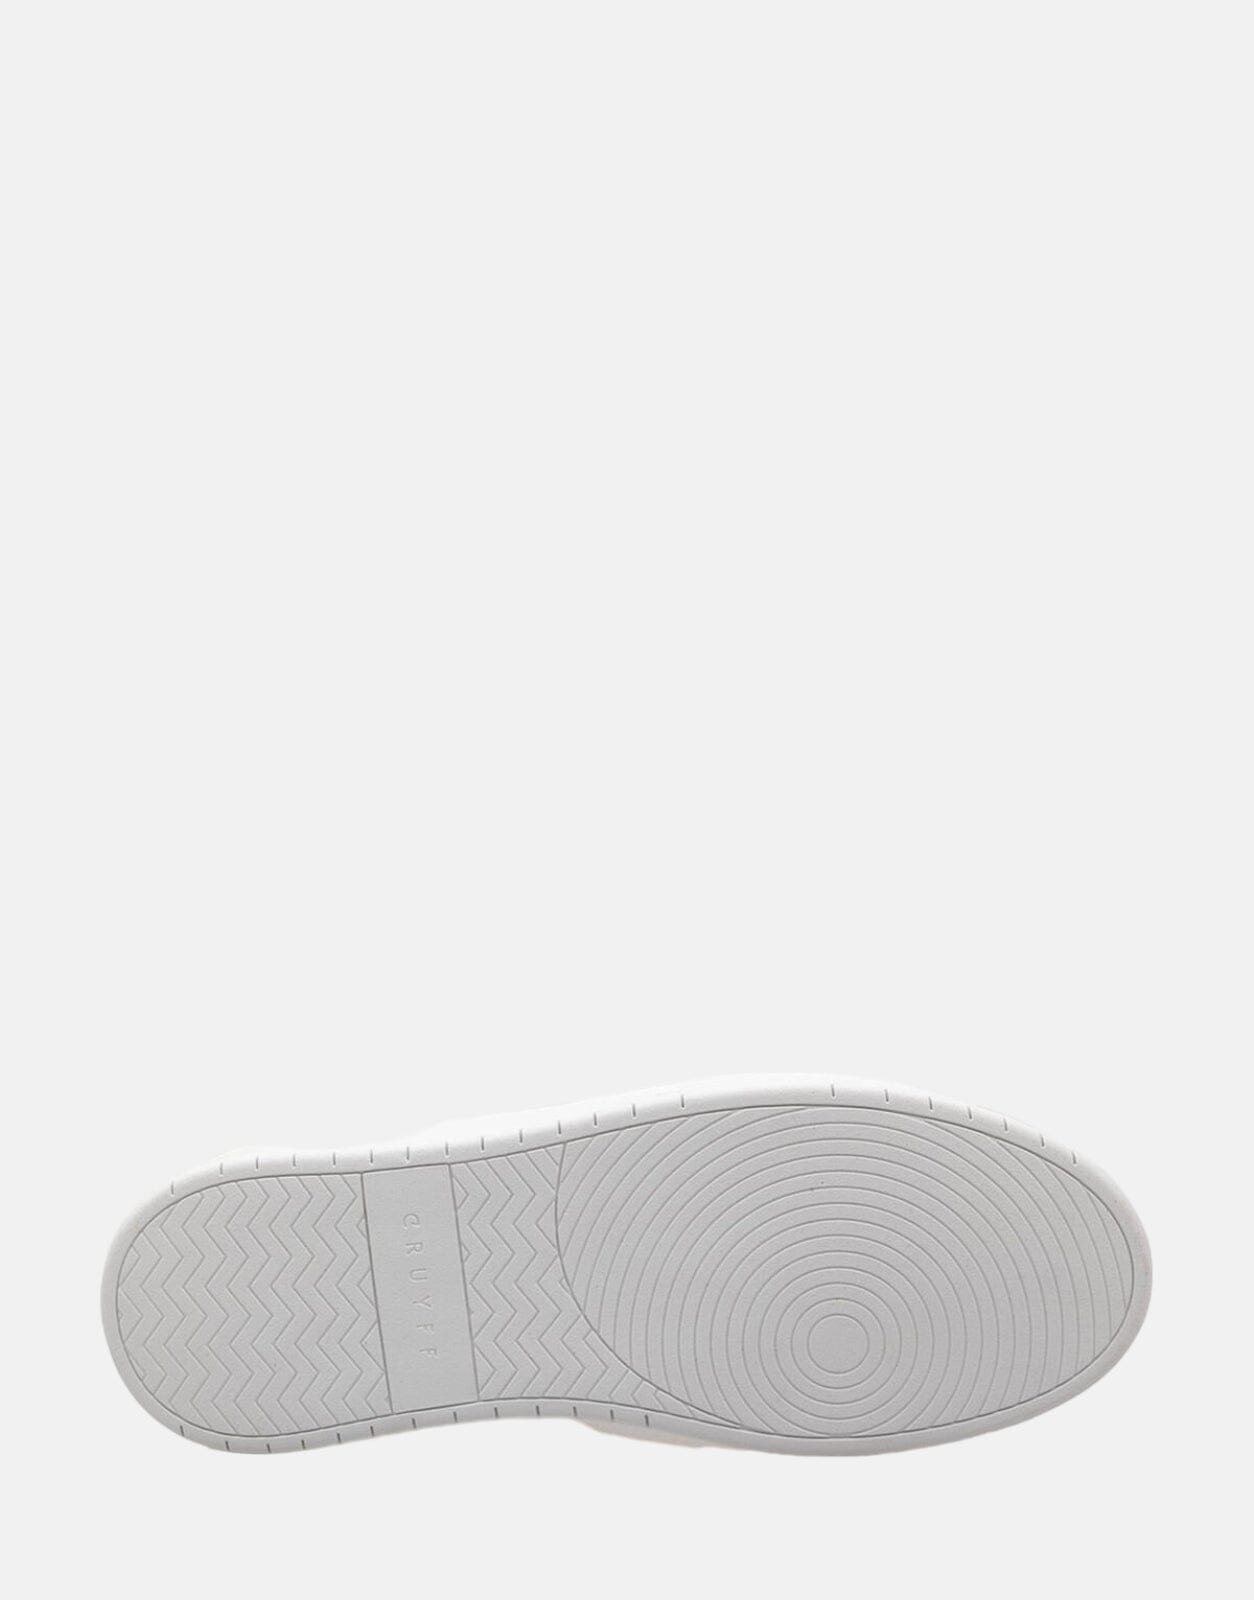 Cruyff Endorsed White Sneakers - Subwear